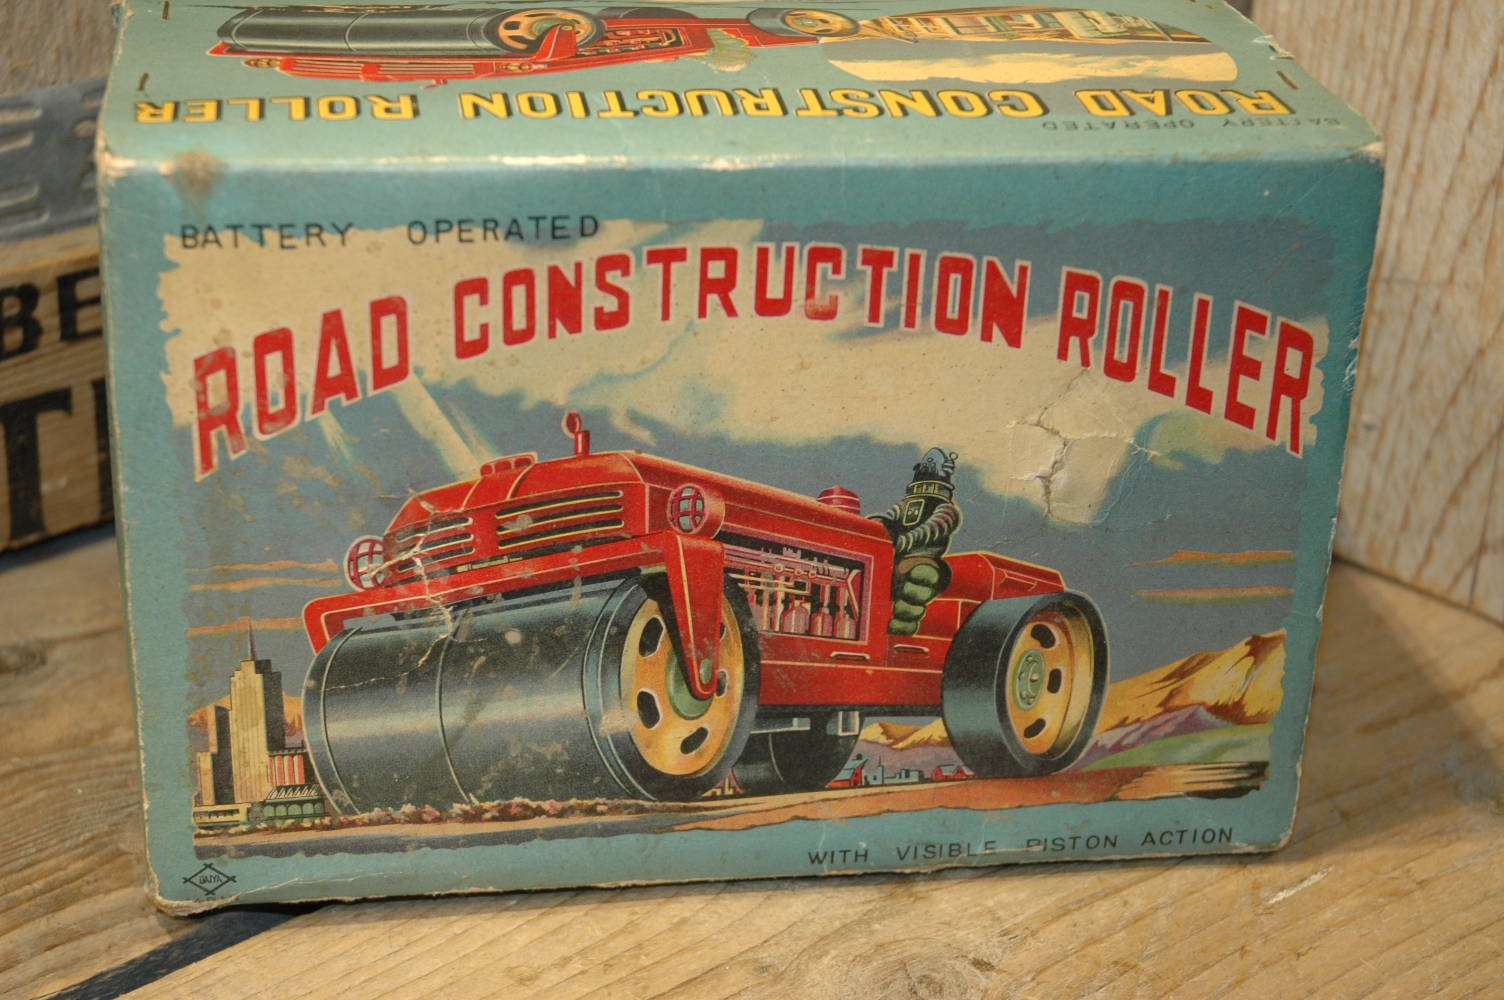 Daiya - Robby Road Construction Roller